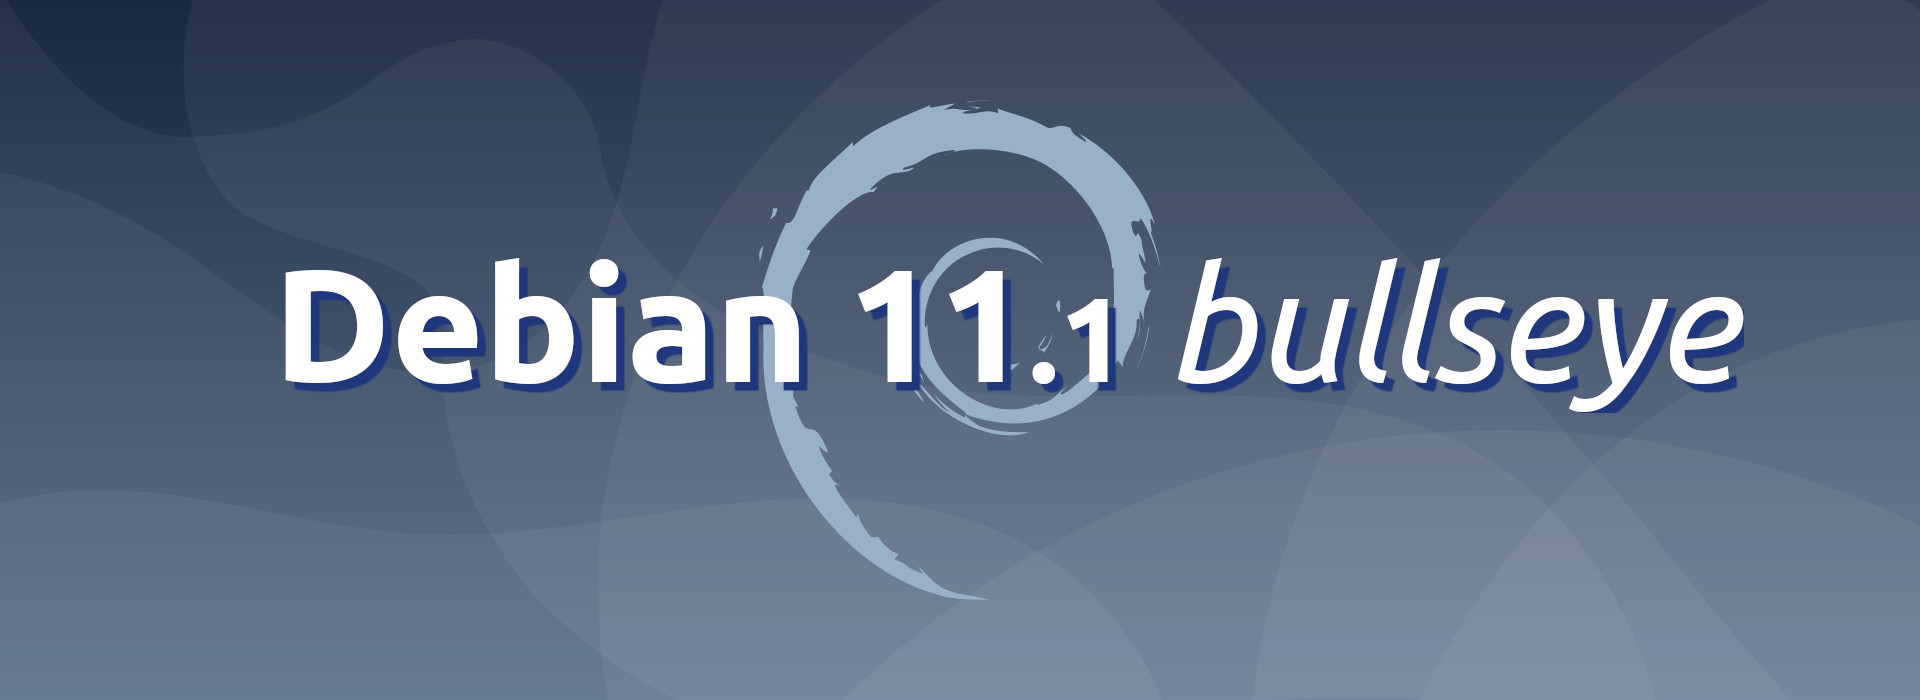 Recensione Debian 11.1 bullseye ita (copertina)